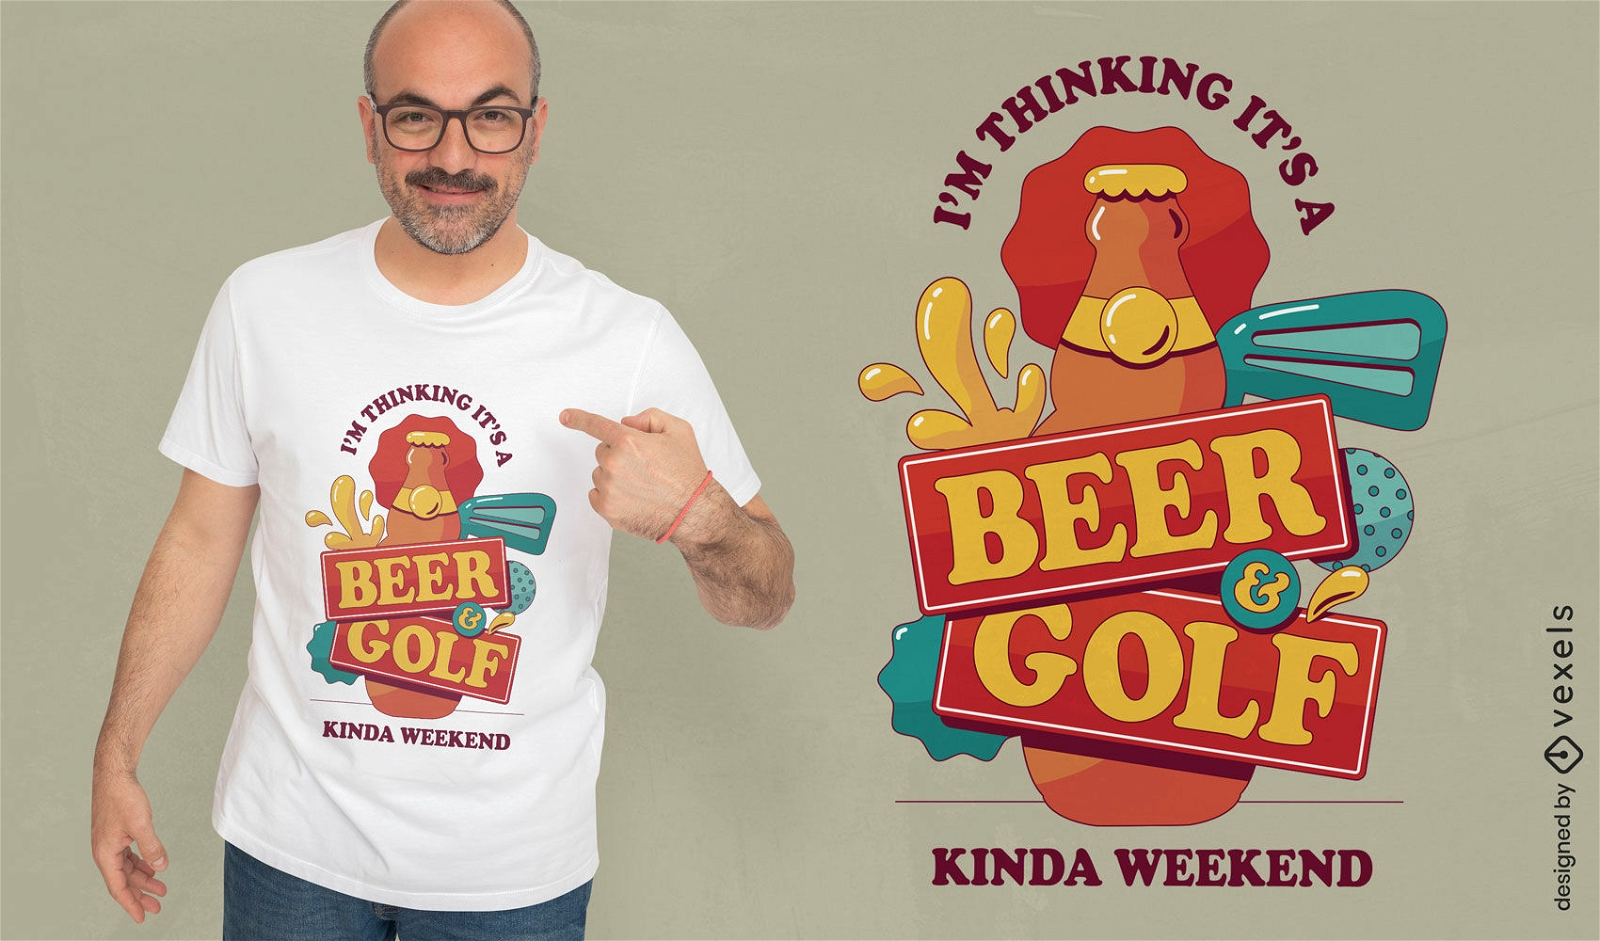 Dise?o de camiseta deportiva de cerveza y golf.